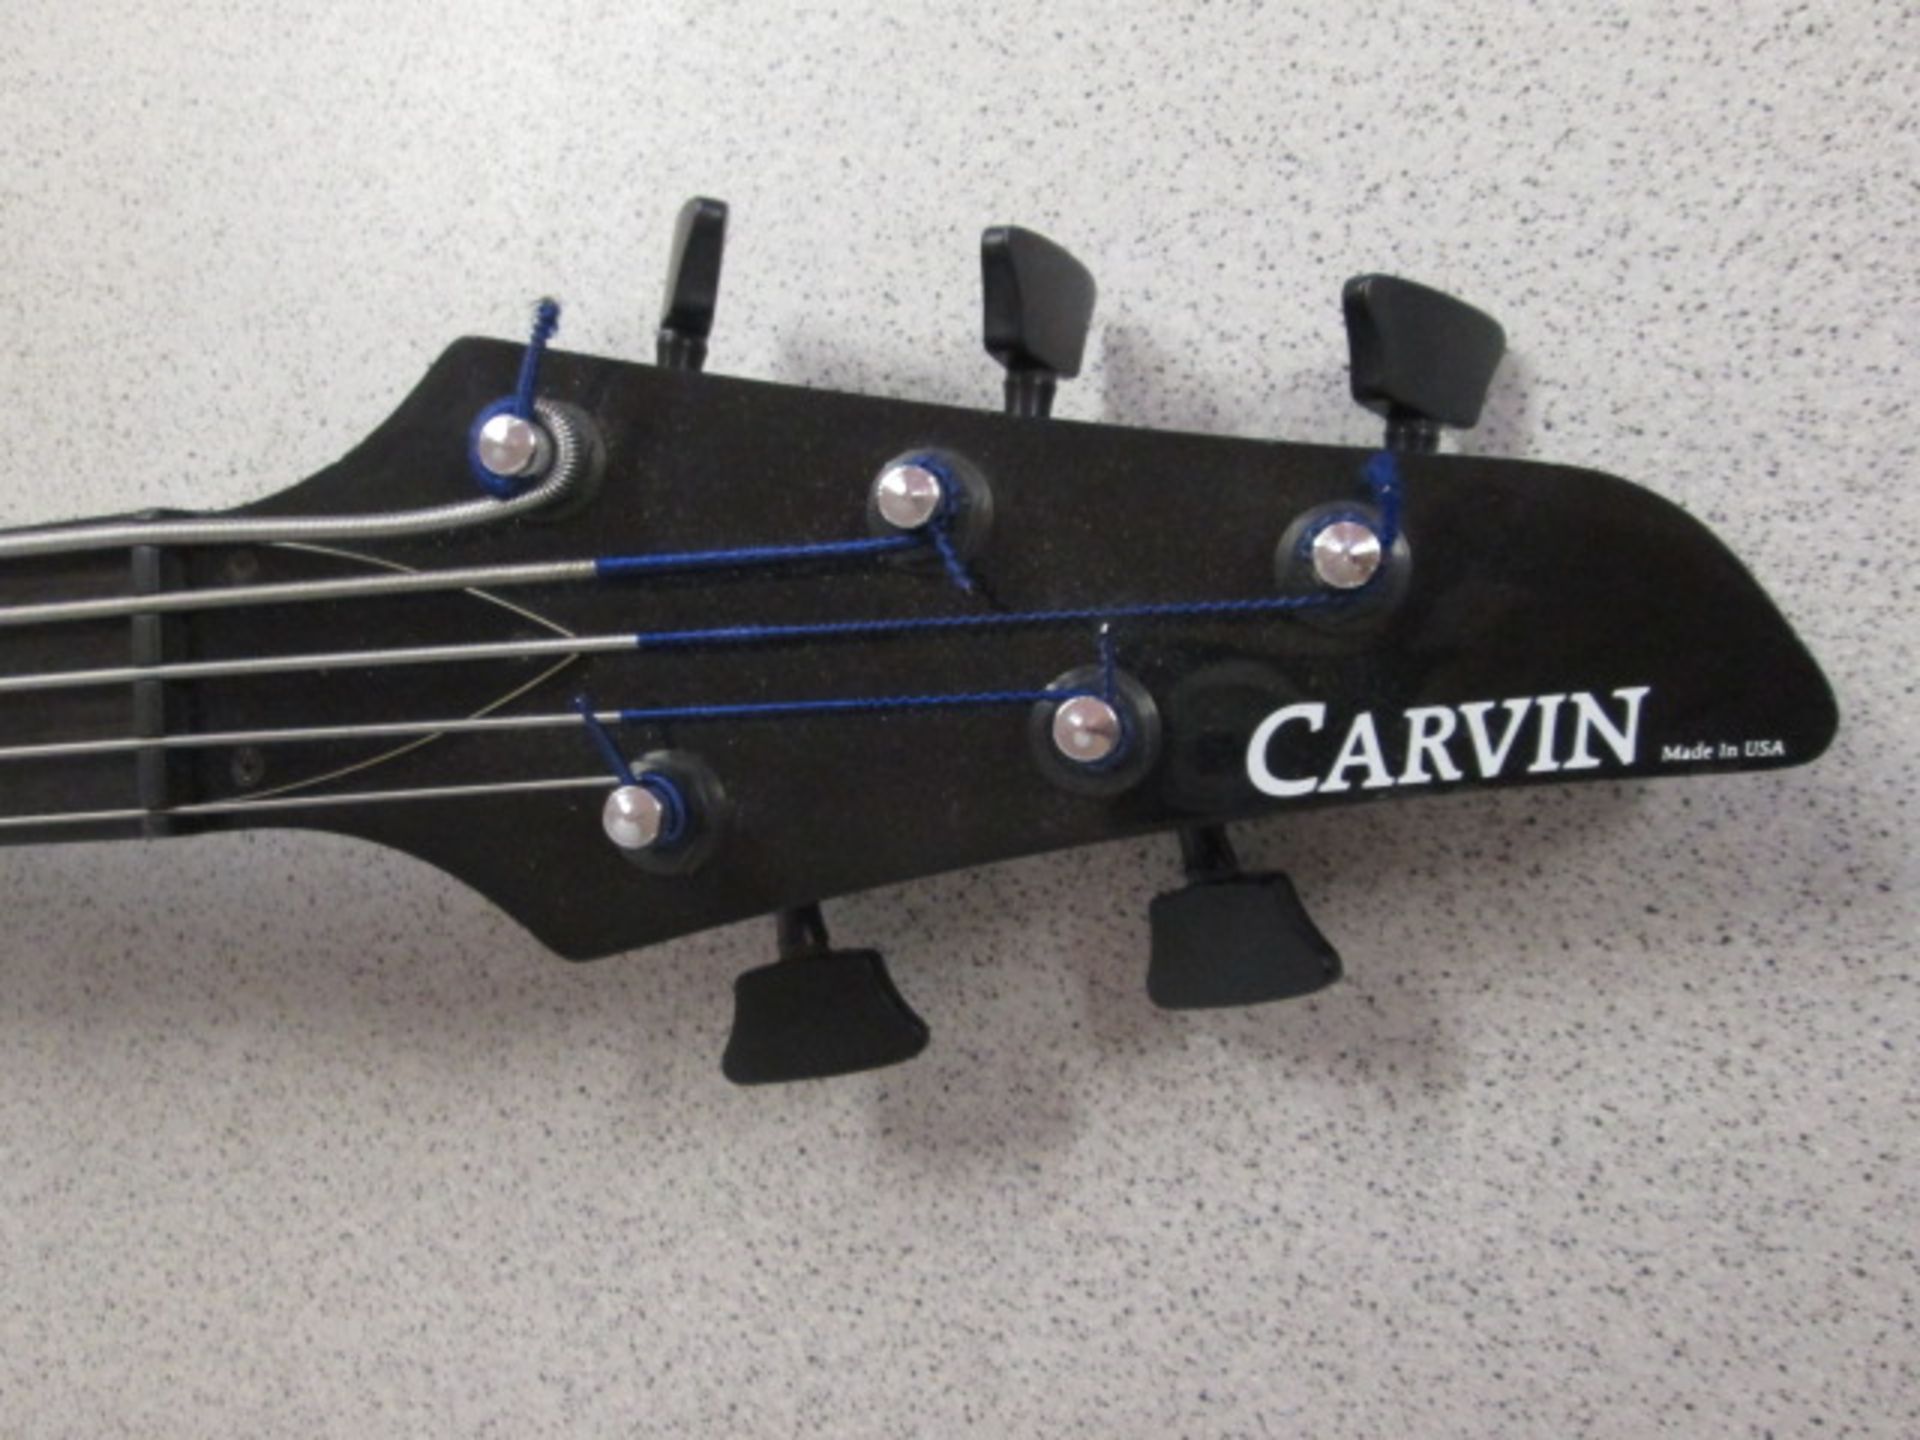 Garvin 5 String Bass Guitar - Image 4 of 7